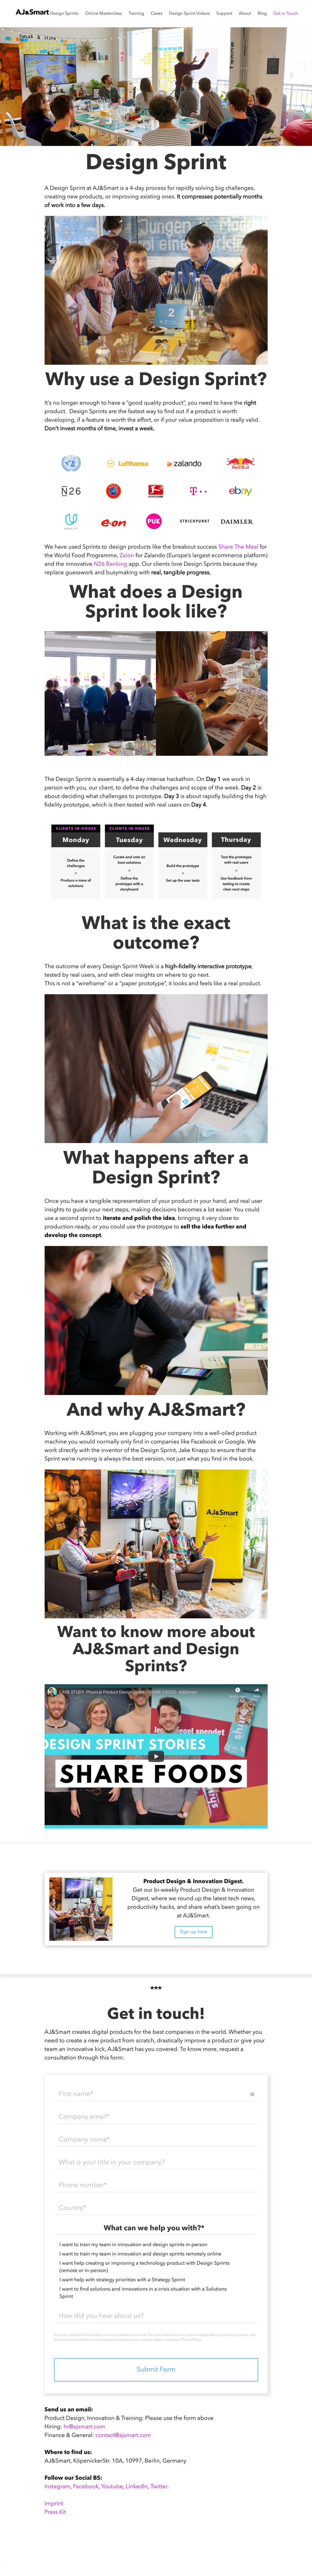 aj&smart design sprint landing page